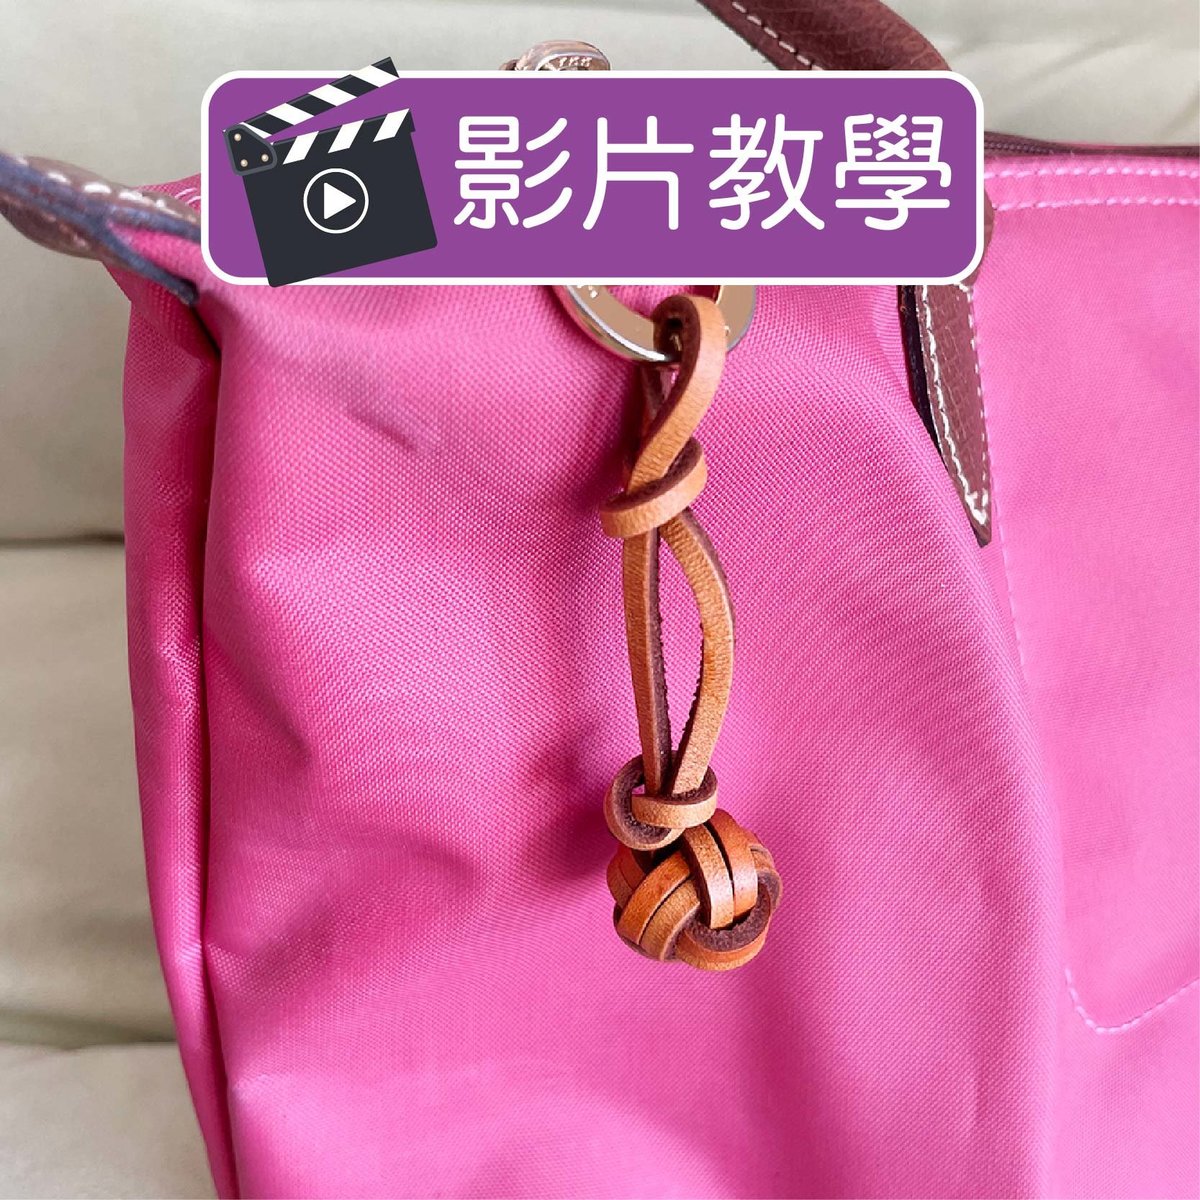 DIY編織繩結真皮手繩多功能繩結/ 手工匙扣 / 祝福繩結 - 金錢結(含材料包) - 香港製造